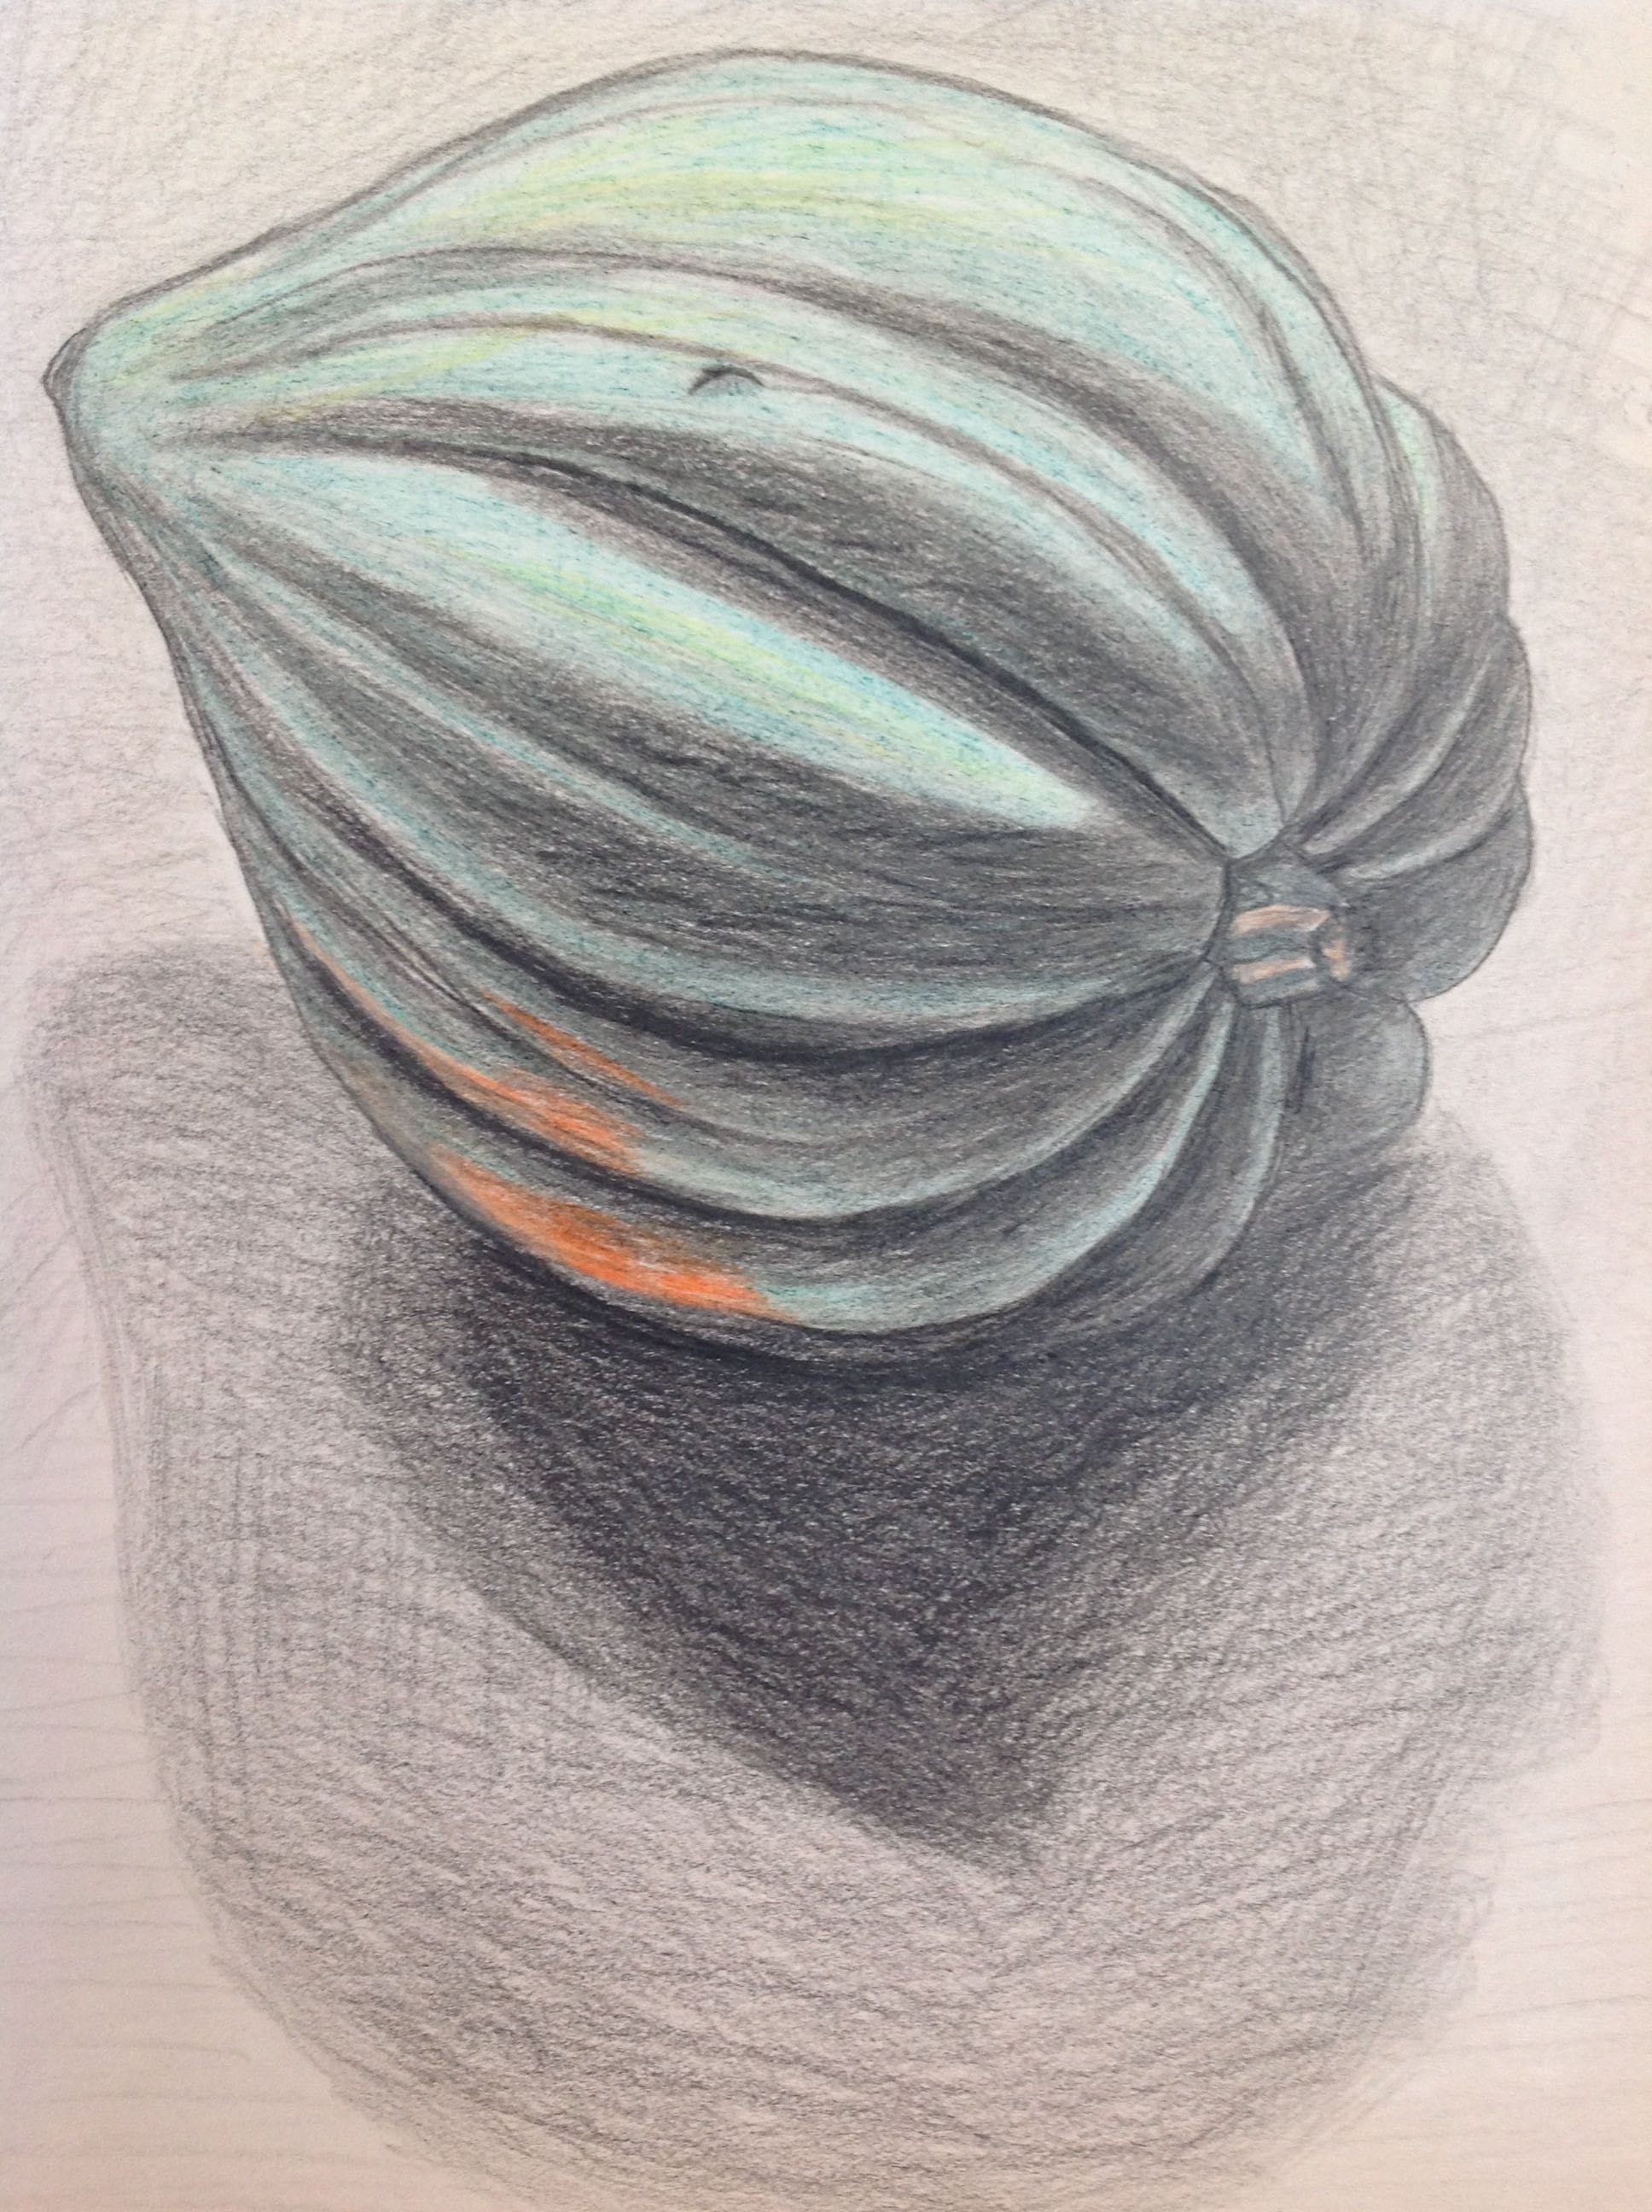 Acorn Squash, 2019
Colored Pencils on Paper
9"W x 11.5"H, Walli White, artist